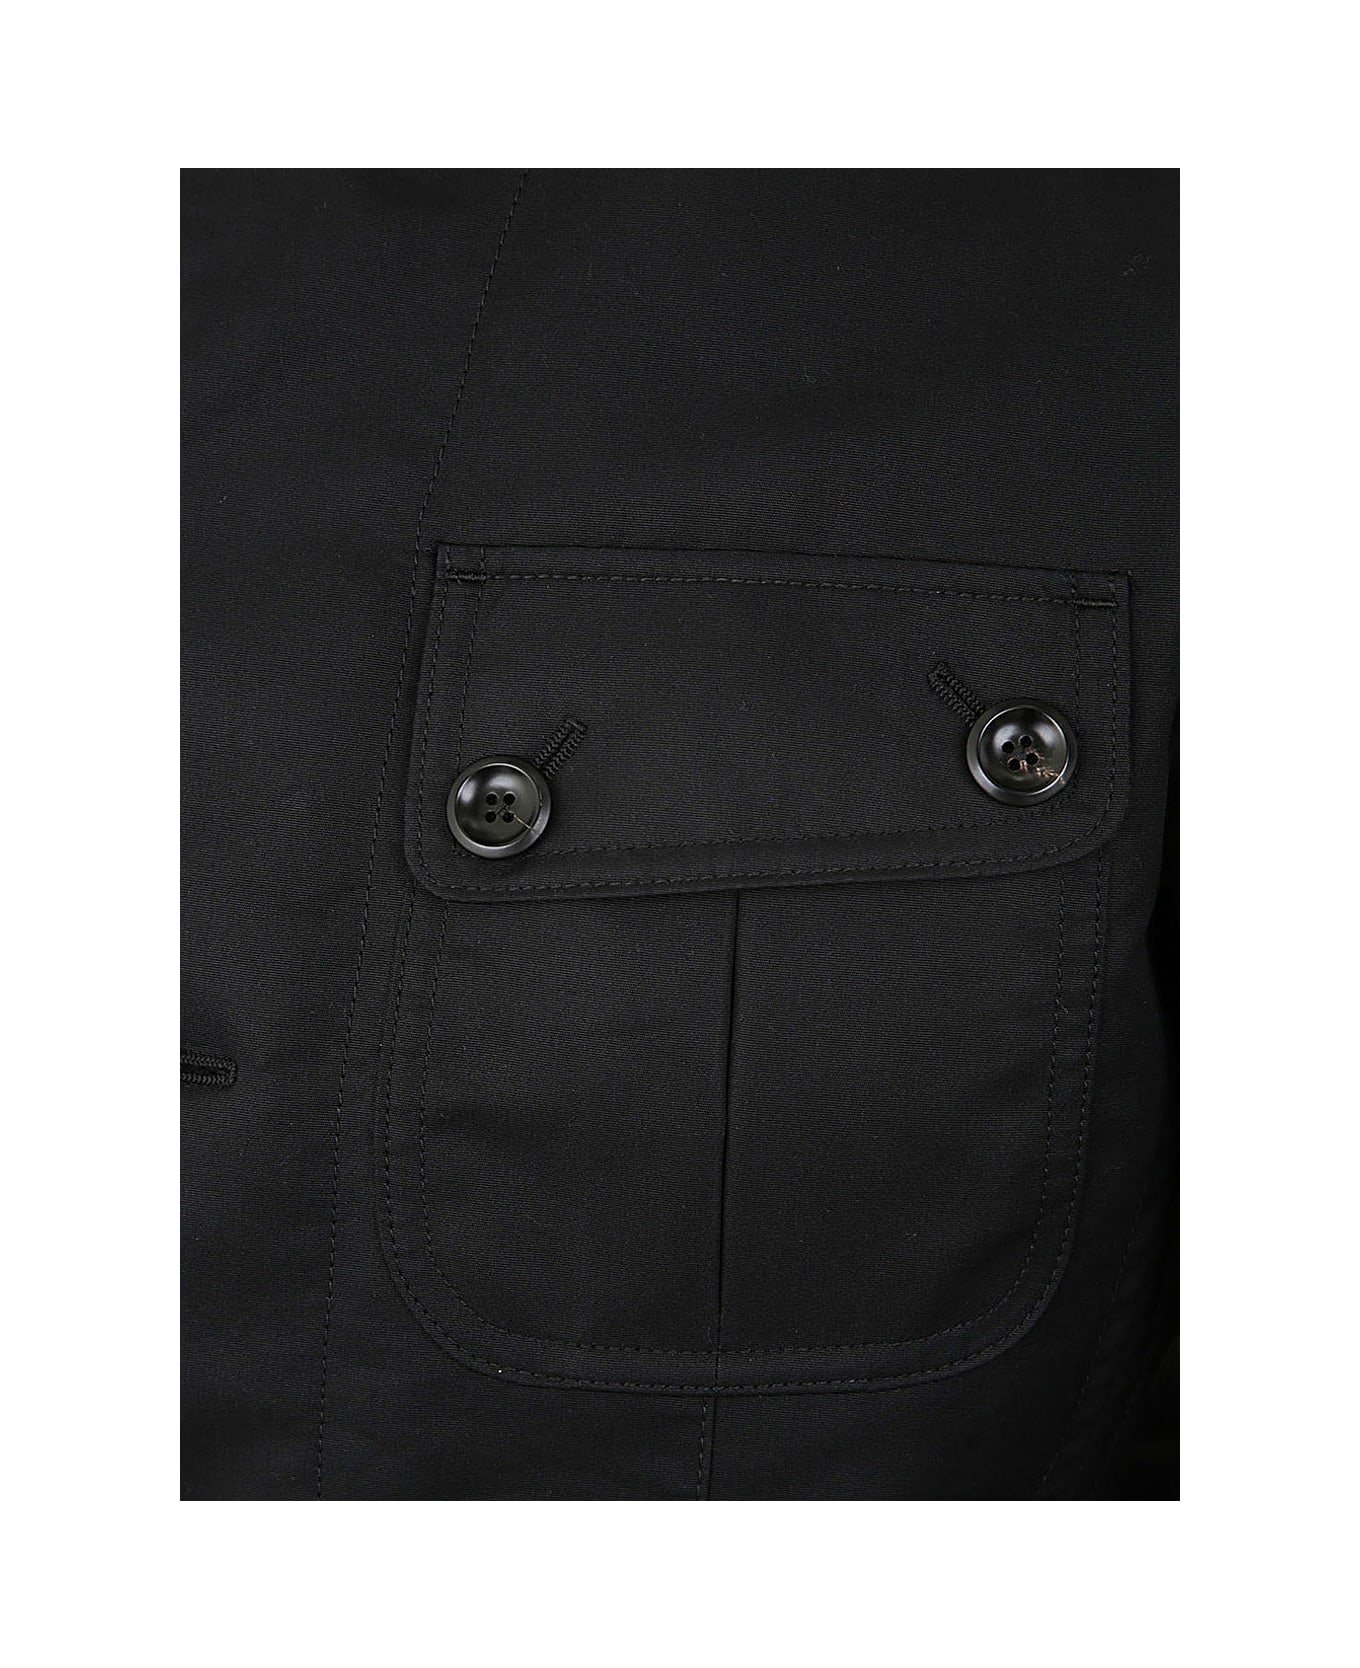 Tom Ford Outwear Jacket - Black ジャケット